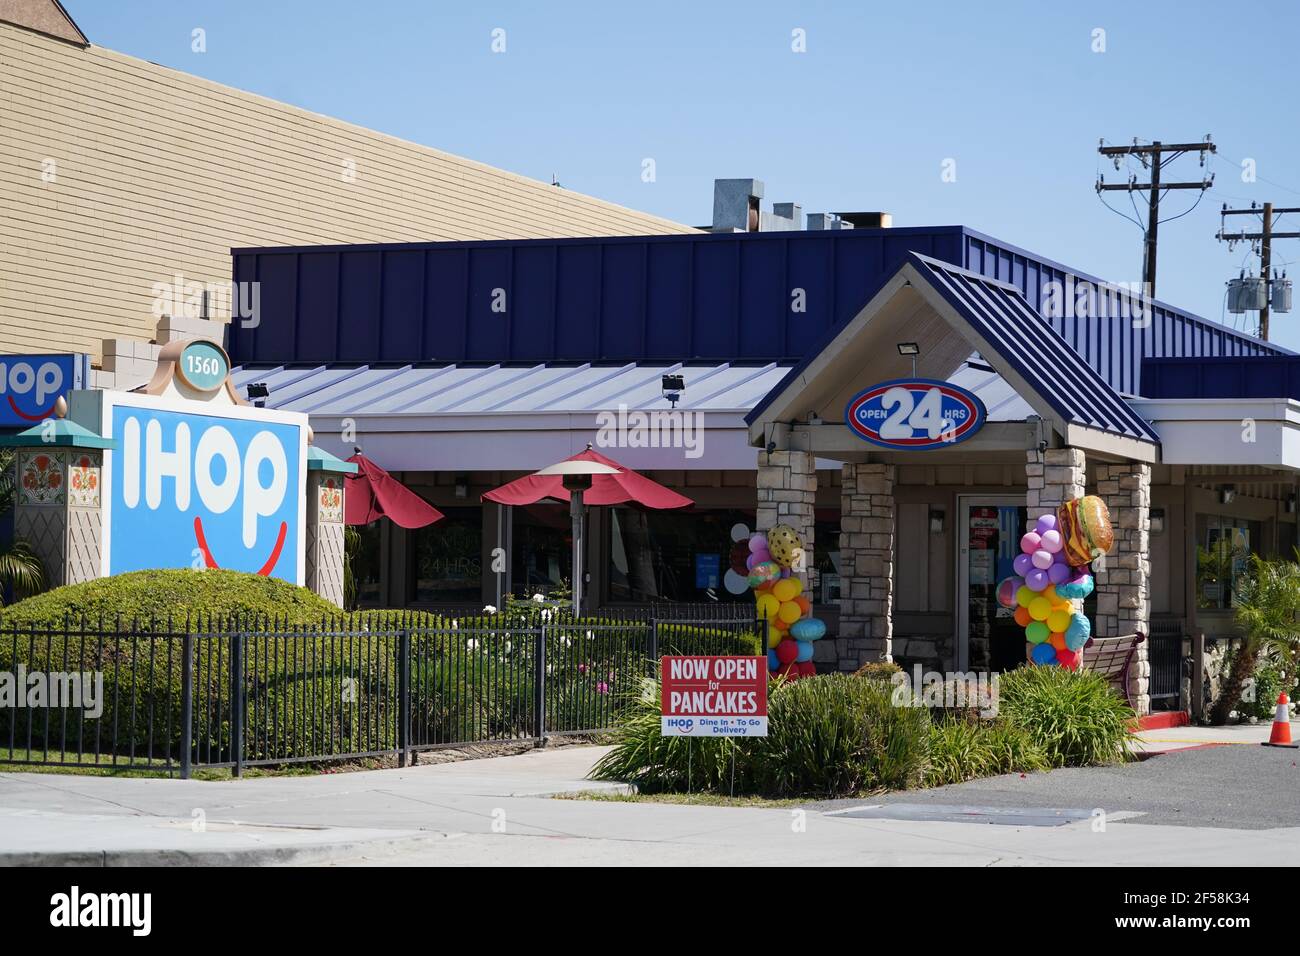 A Now Open sign at IHOP restaurant on S. Harbor Blvd. near Disneyland, Wednesday, March 24, 2021, in Anaheim, Calif. Stock Photo